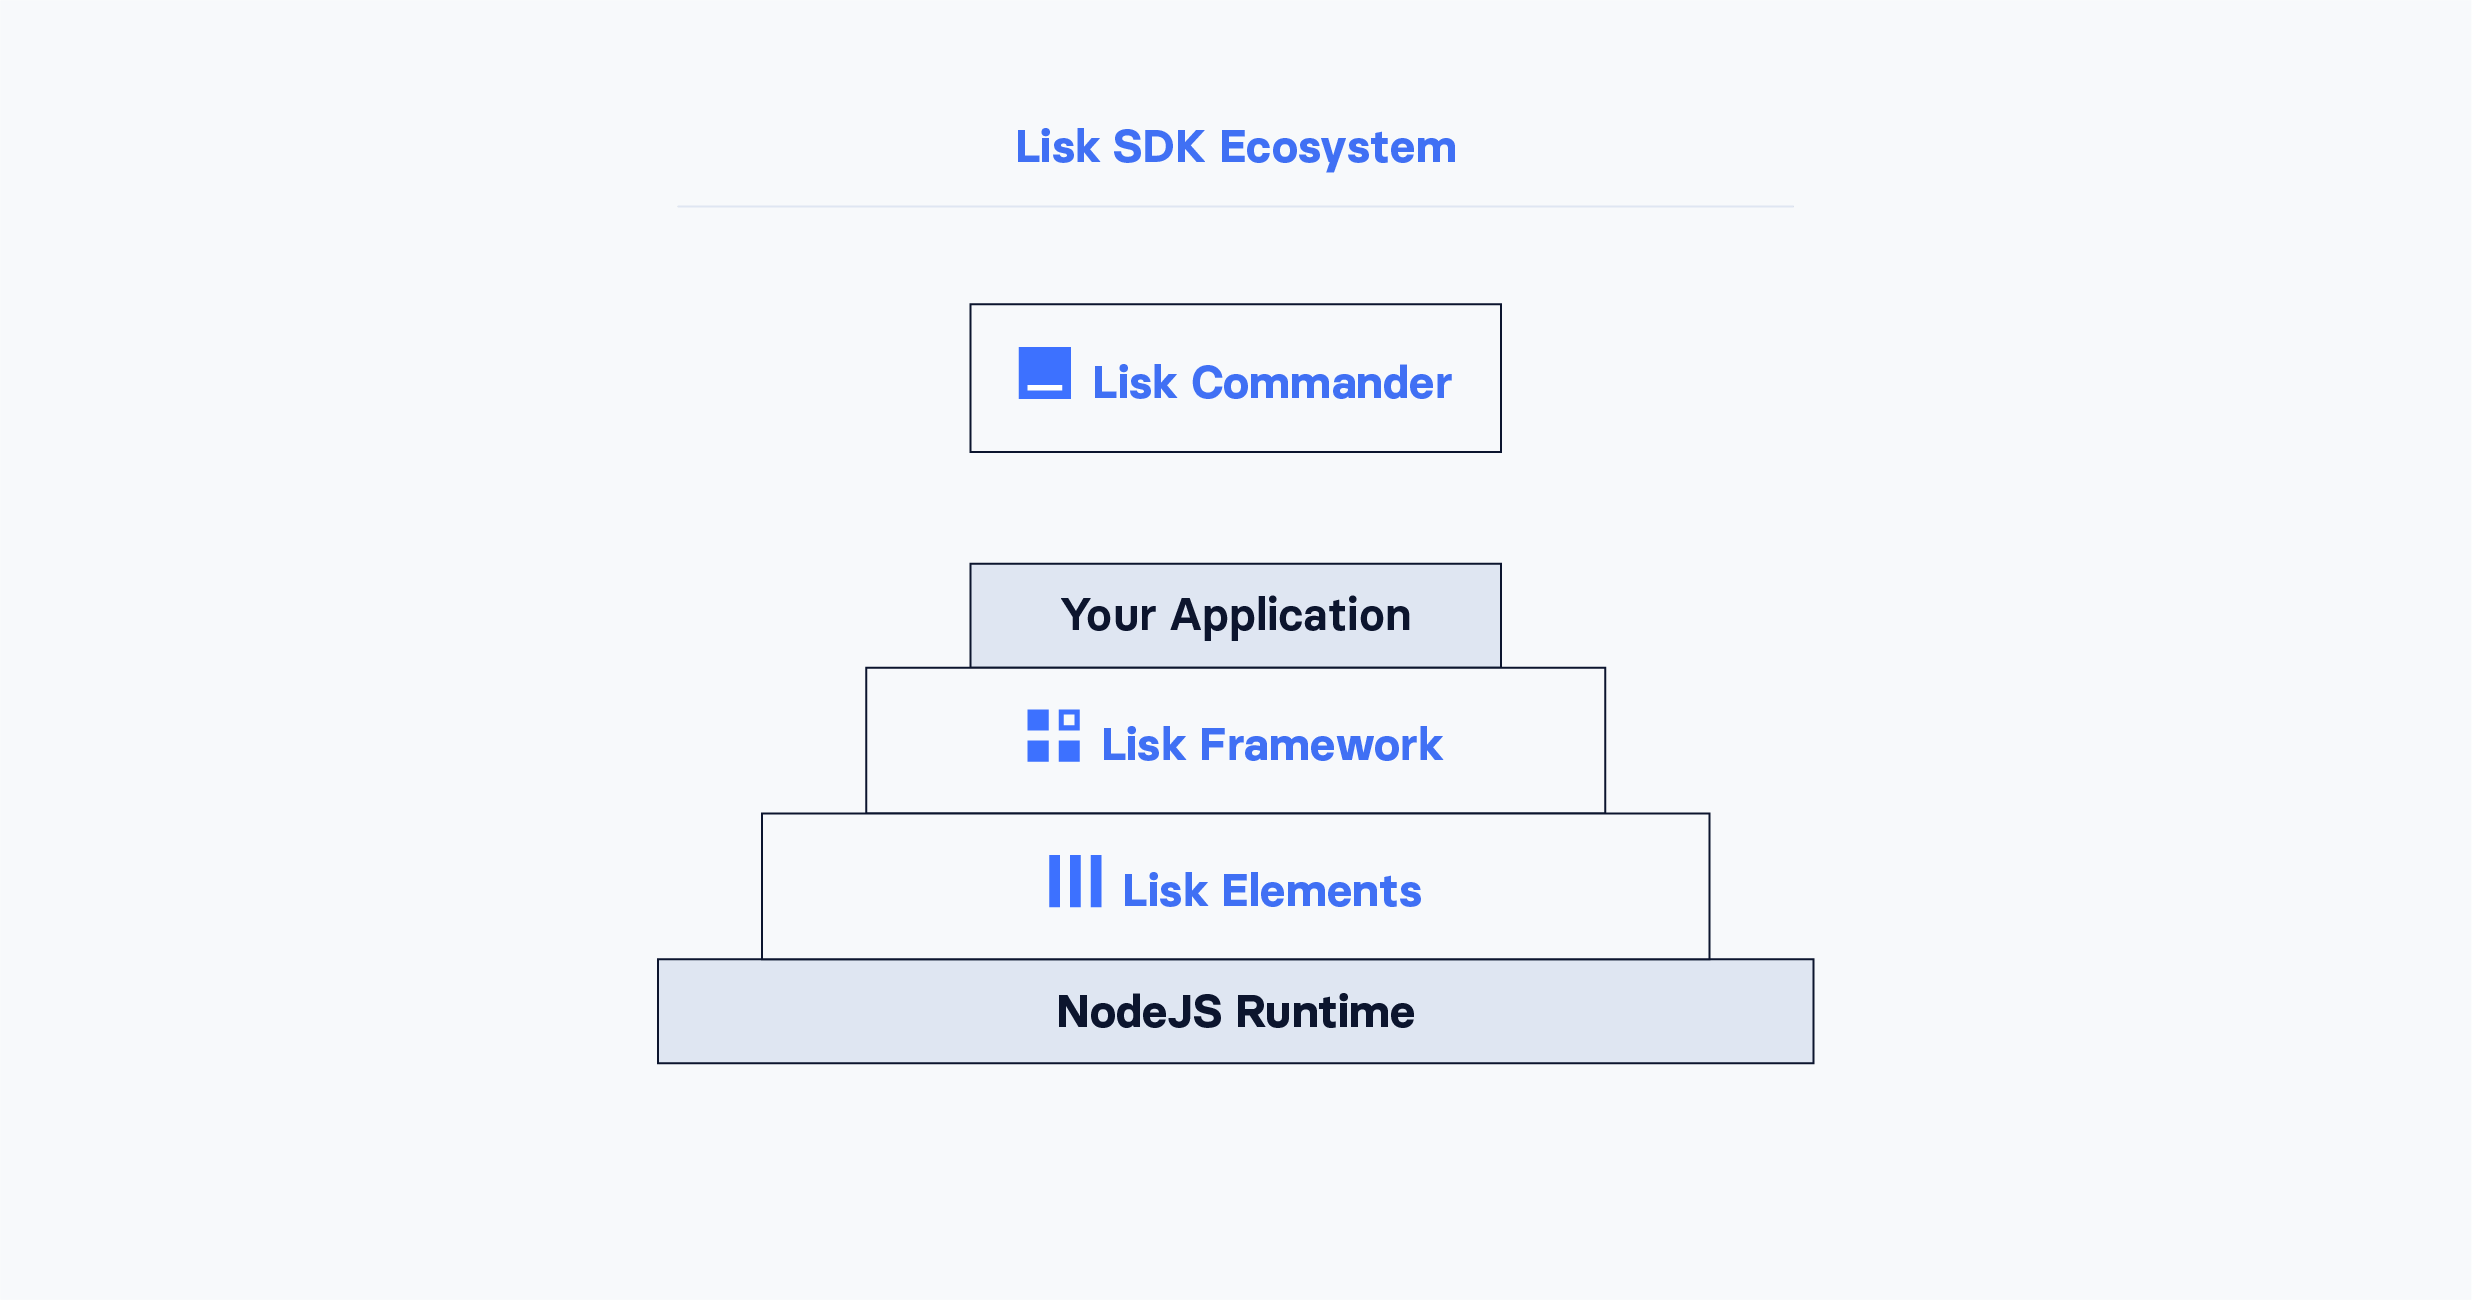 Lisk SDK ecosystem diagram